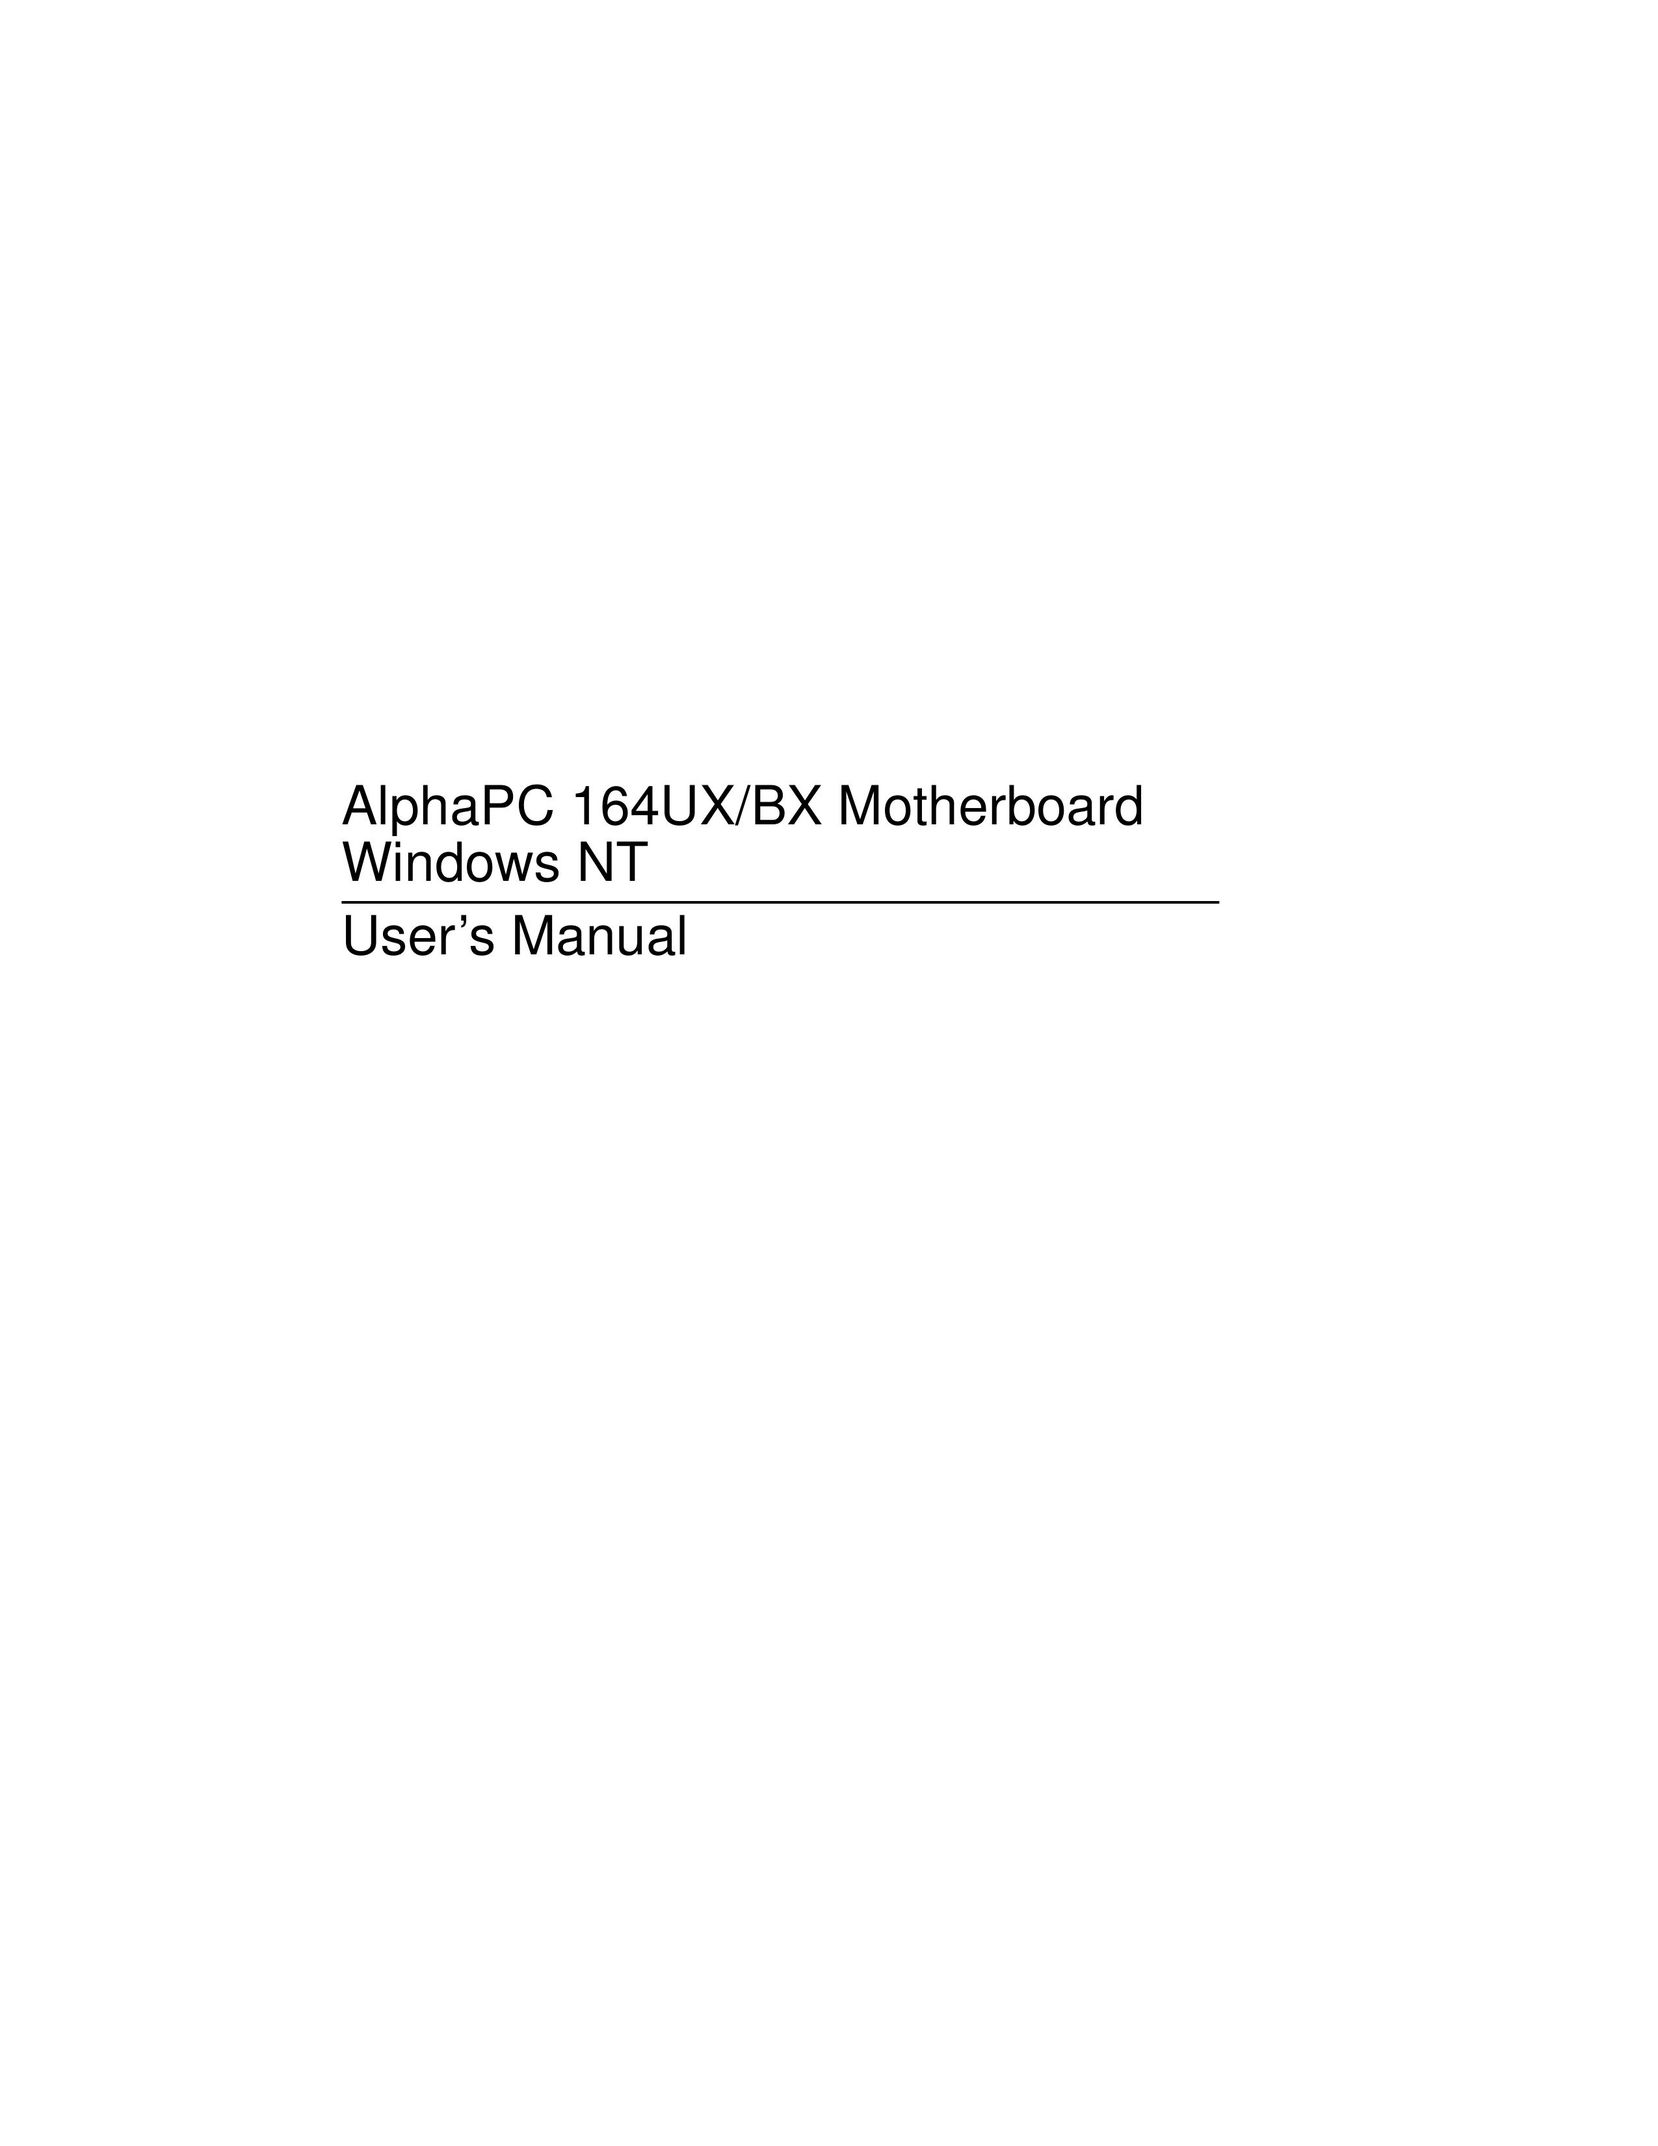 Samsung 164BX Computer Hardware User Manual